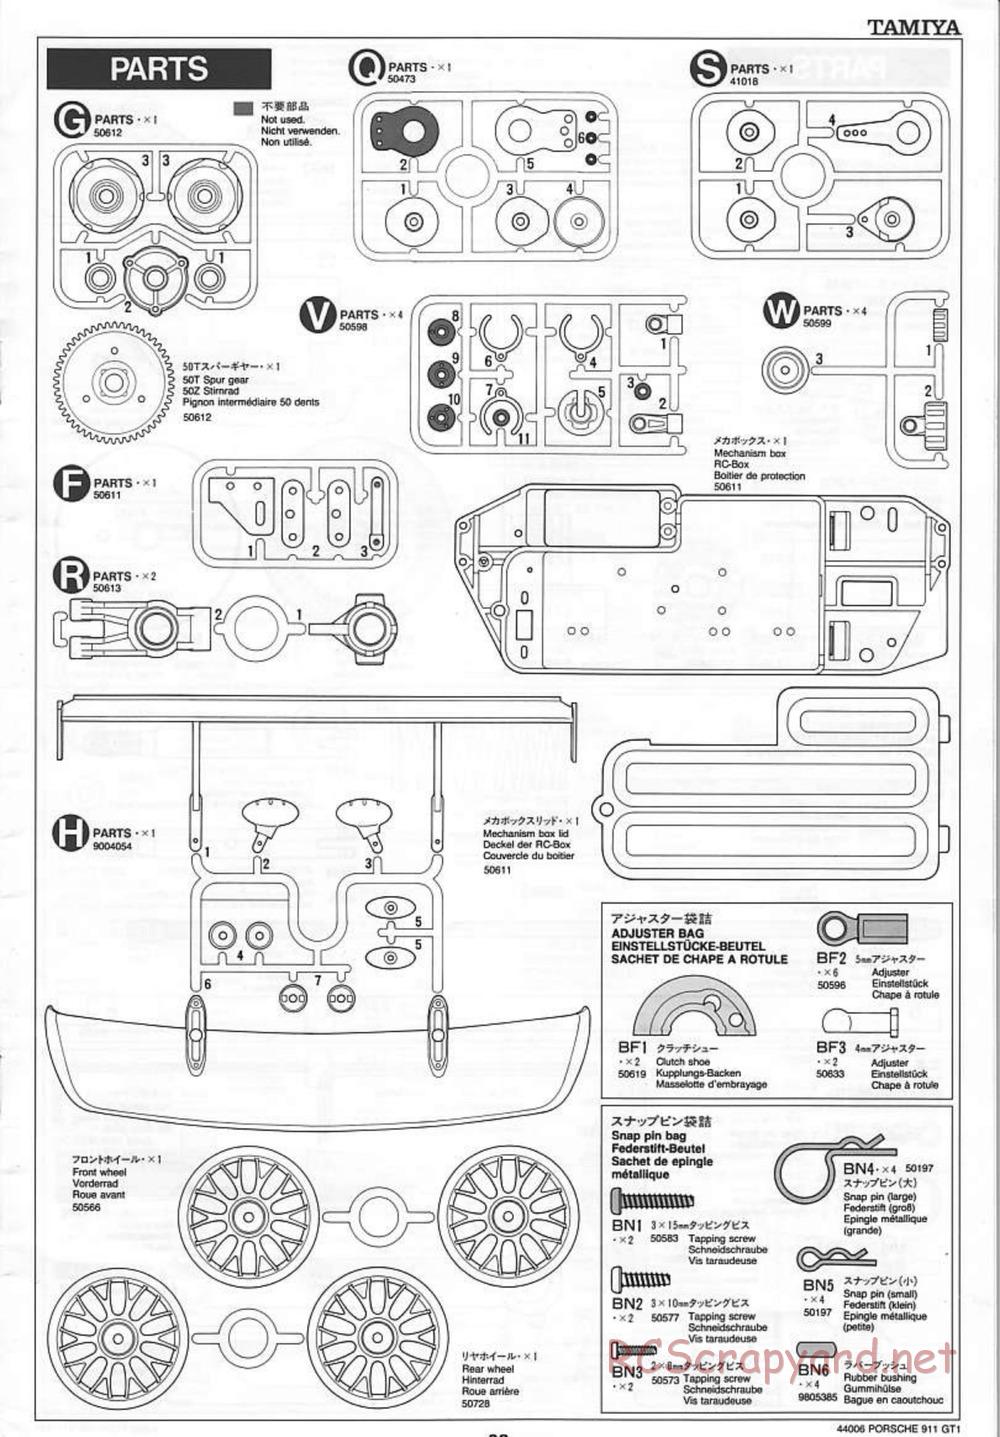 Tamiya - Porsche 911 GT1 - TGX Mk.1 Chassis - Manual - Page 29